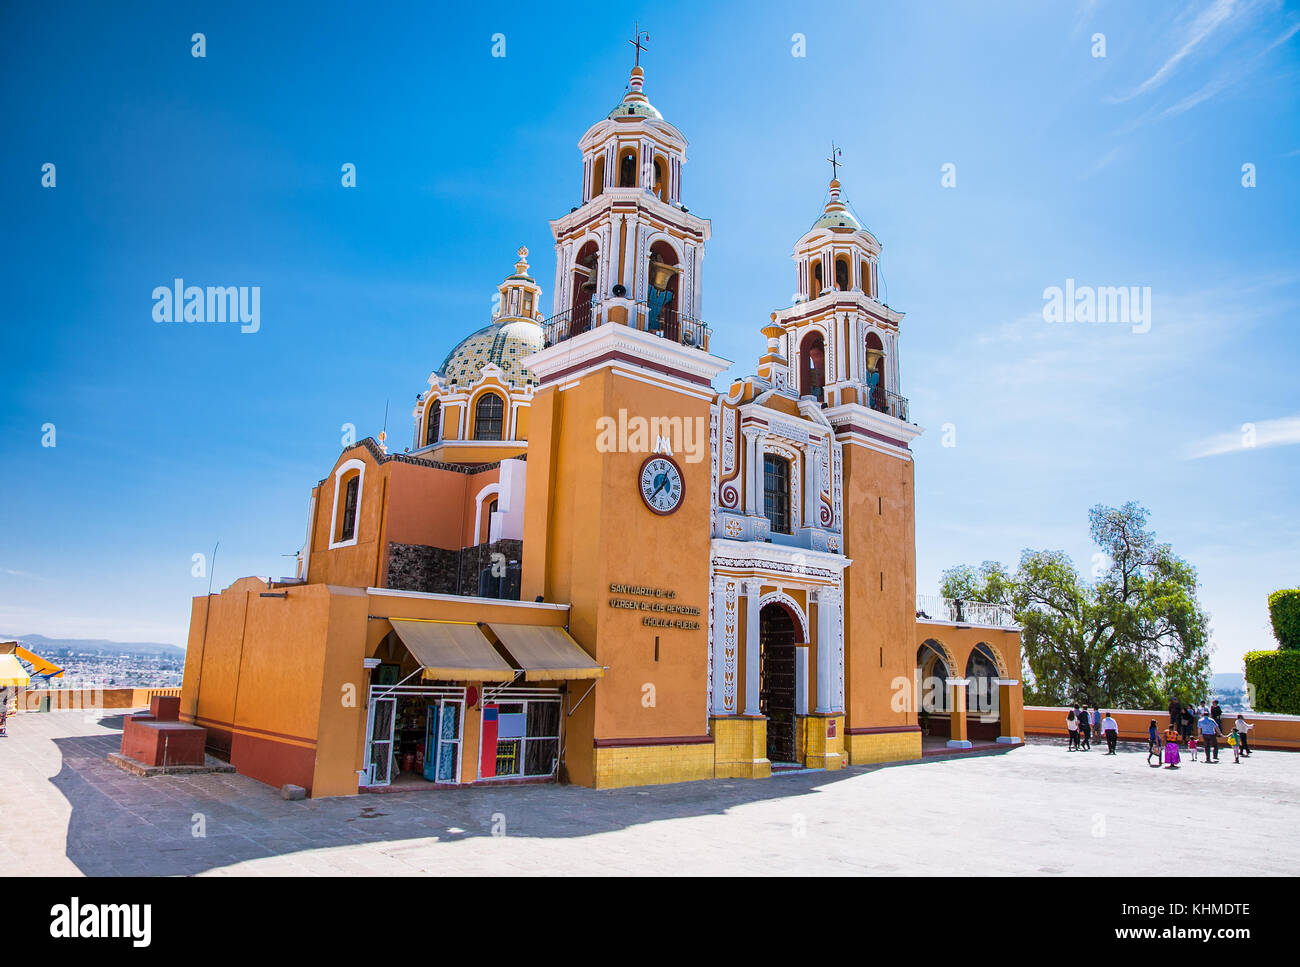 Santuario de los remedios, Cholula, Puebla, Mexico (Orange colonial catholic church with two bell towers built atop Tlachihualtepetl mayan pyramid) Stock Photo